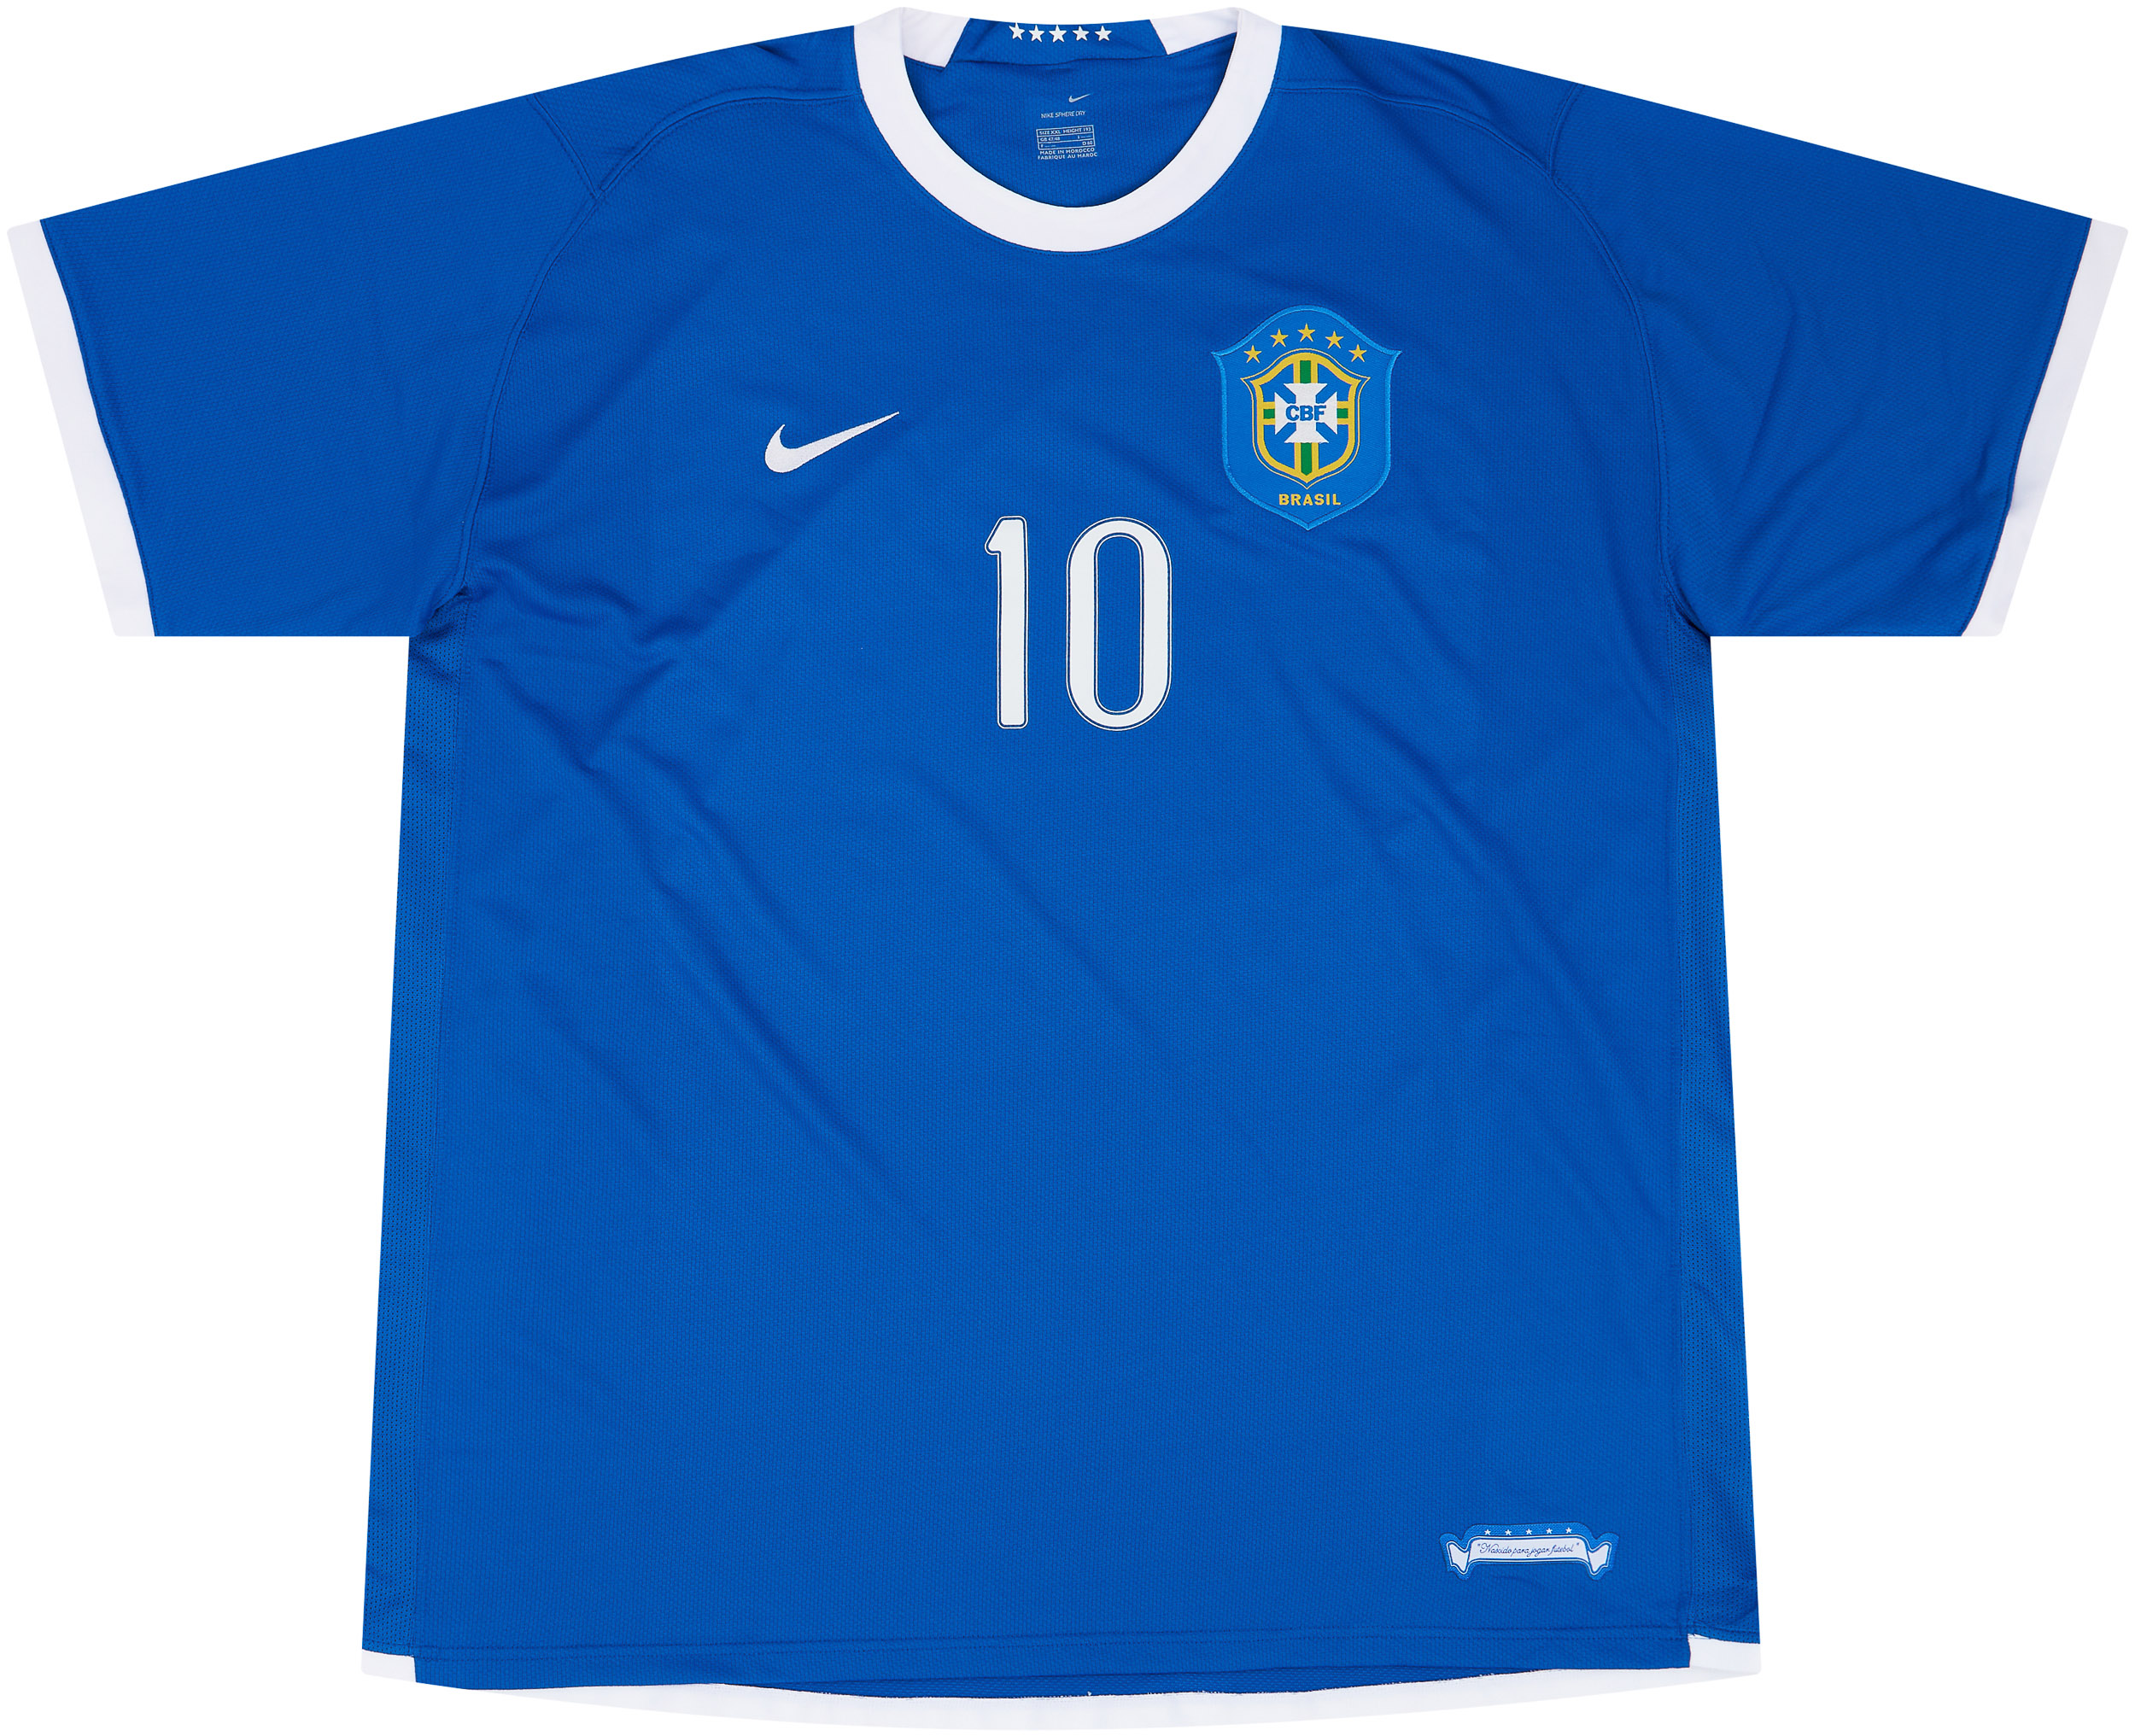 ronaldinho brazil jersey 2006